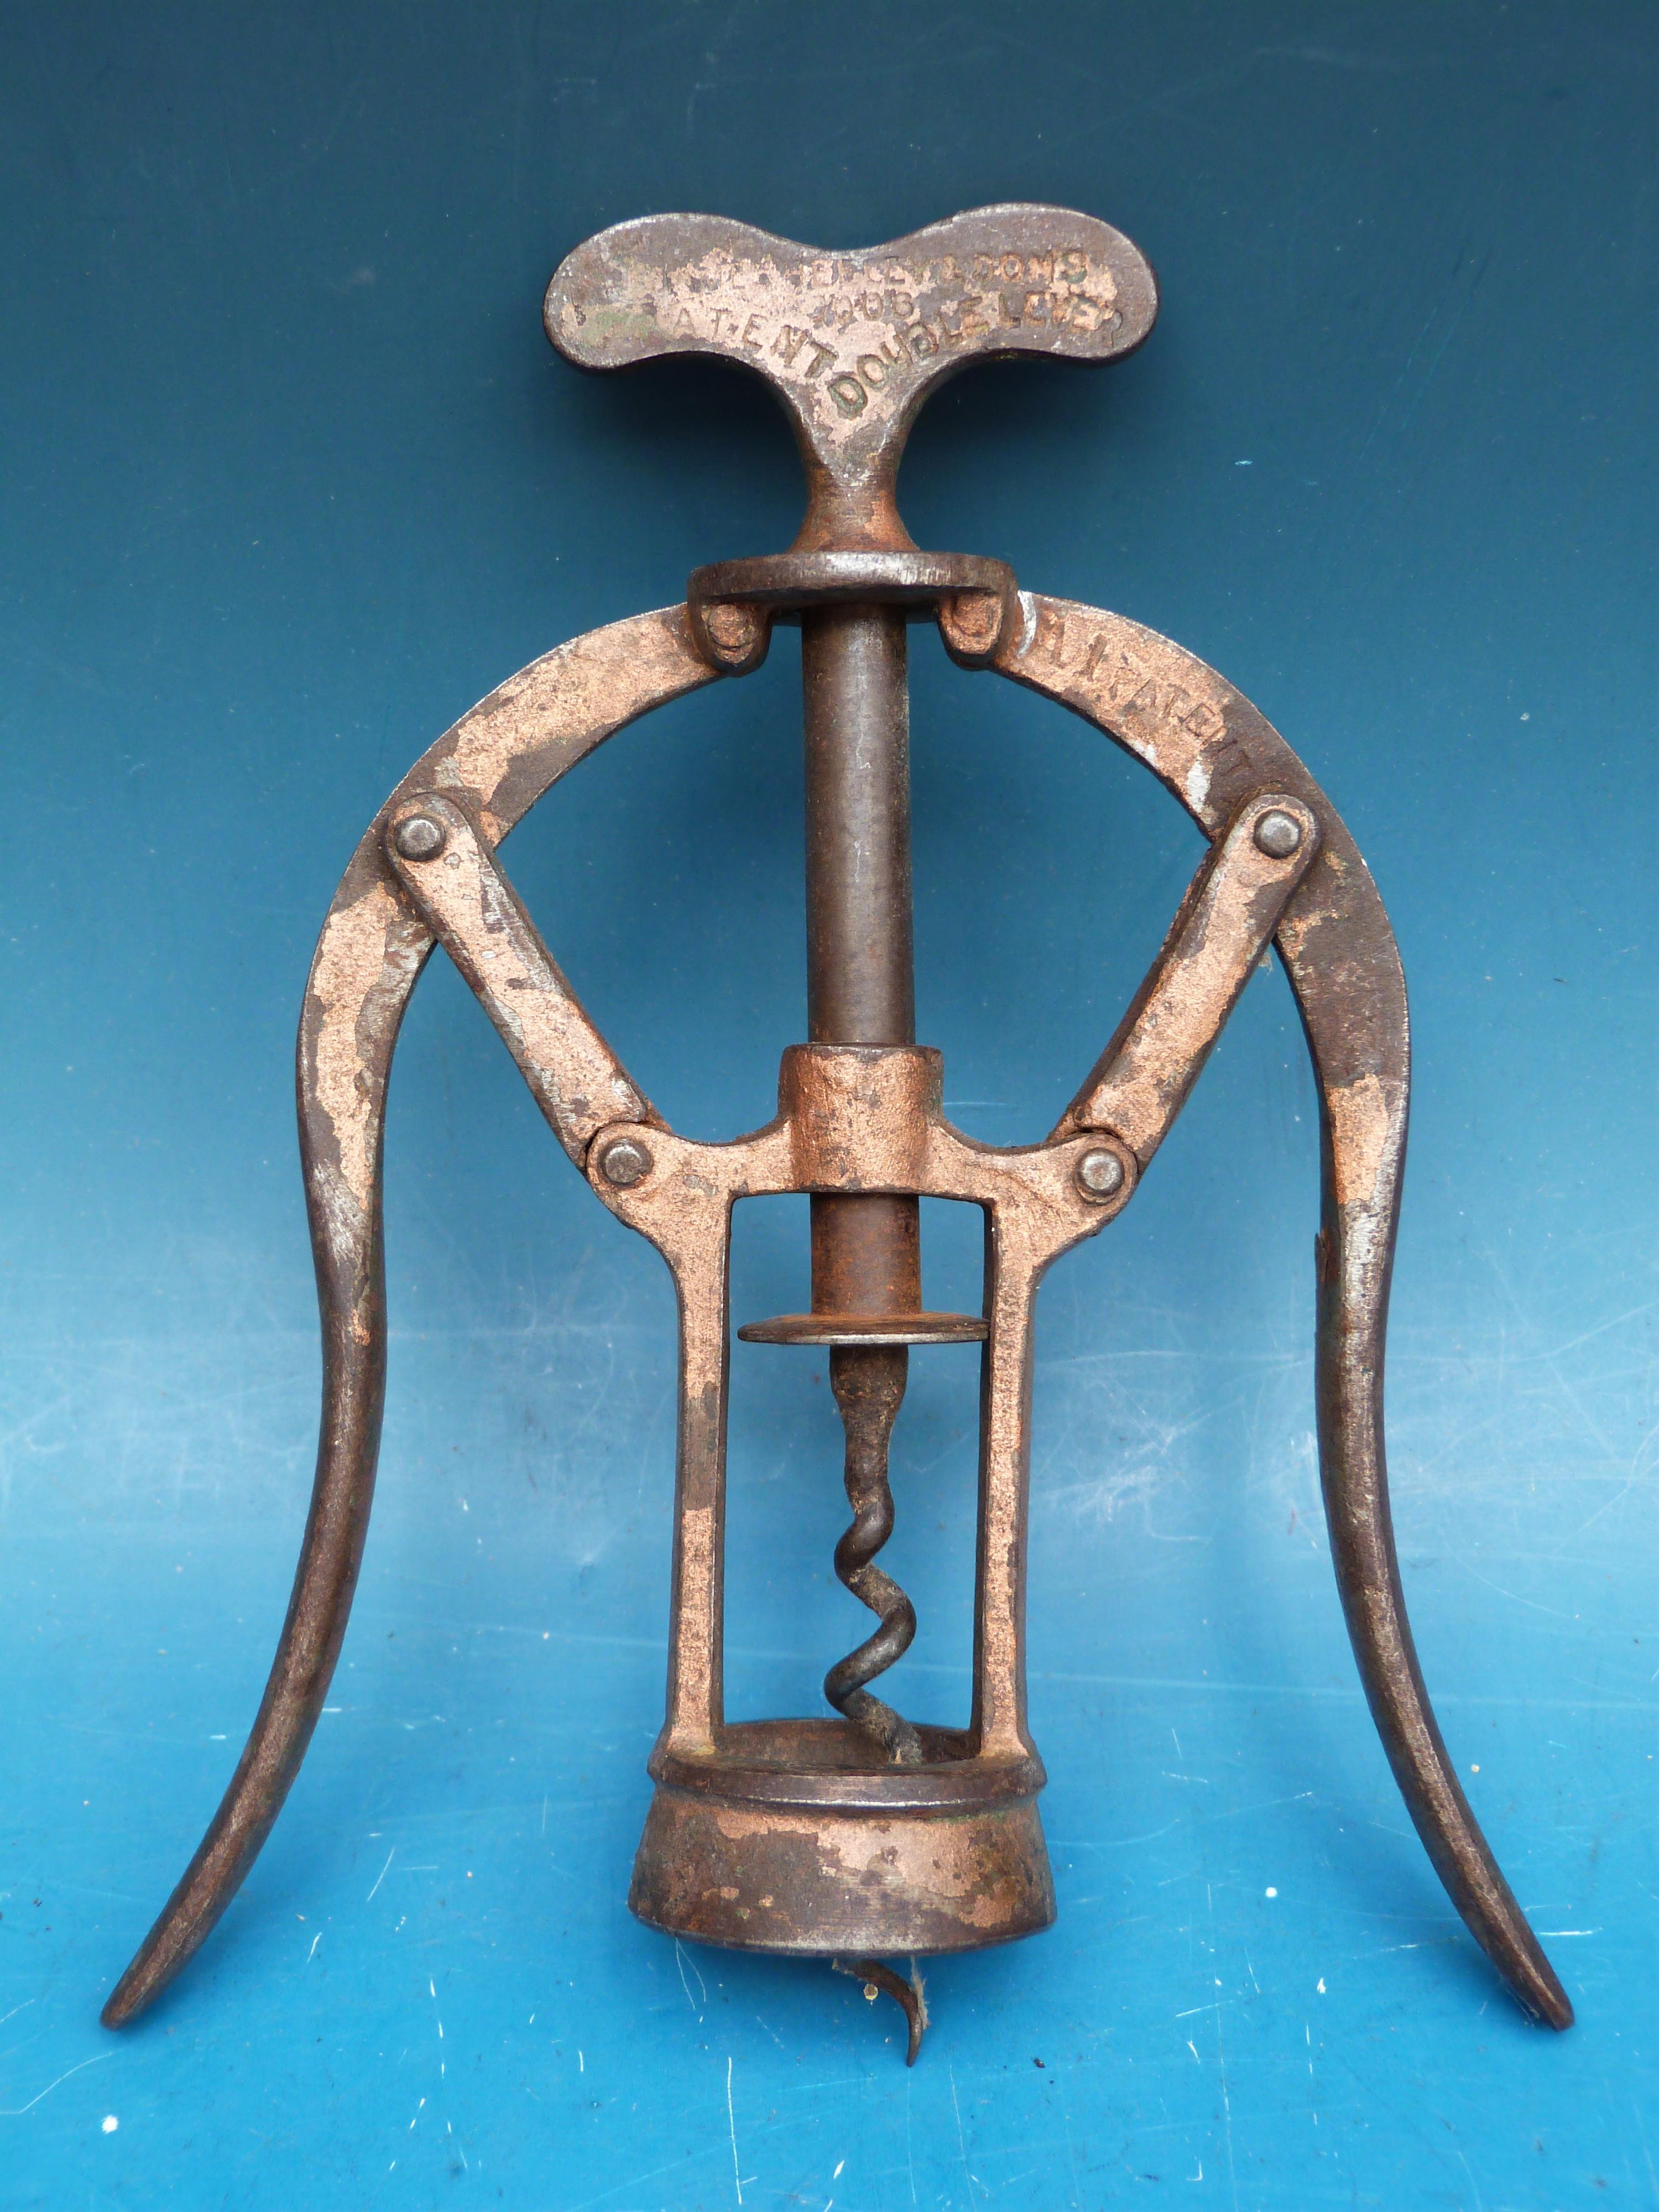 A James Heeley double lever corkscrew